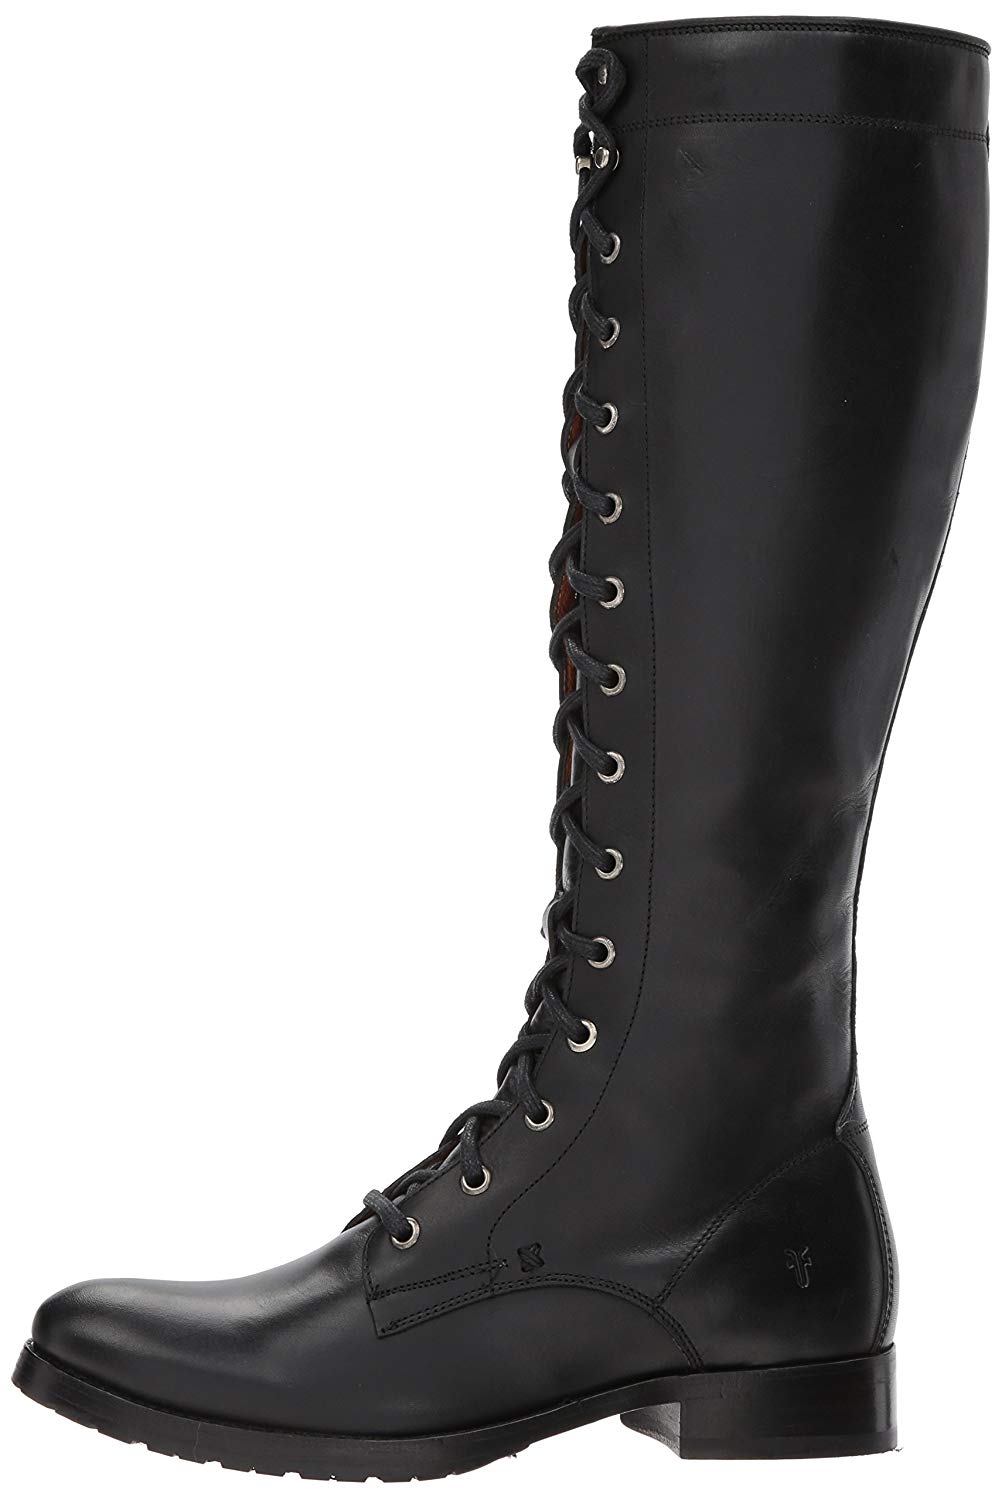 FRYE Women's Melissa Tall Lace Boot, Black, Size 7.5 ZoFN | eBay